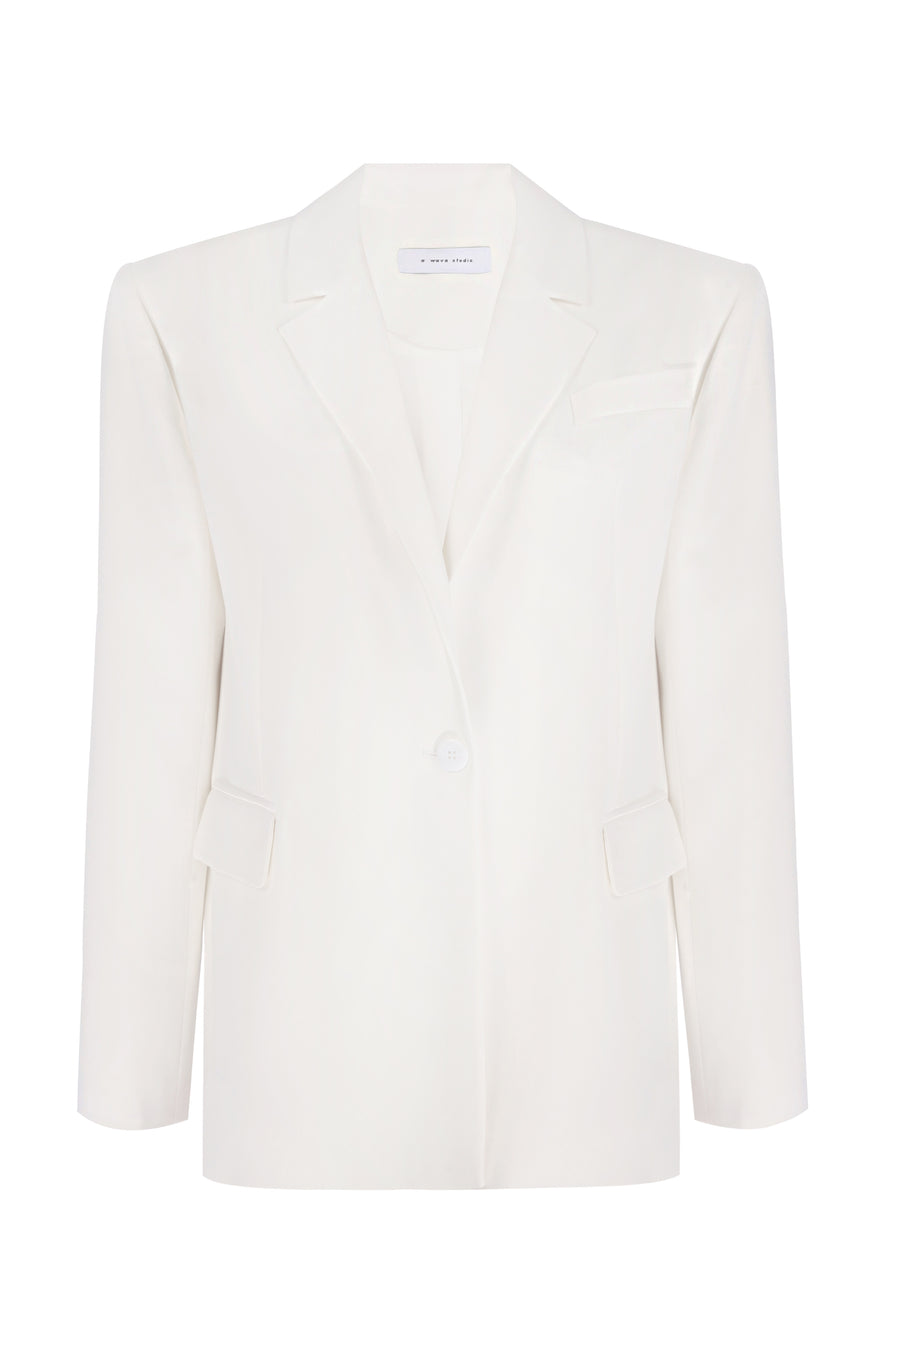 The Mara Pearl White Jacket